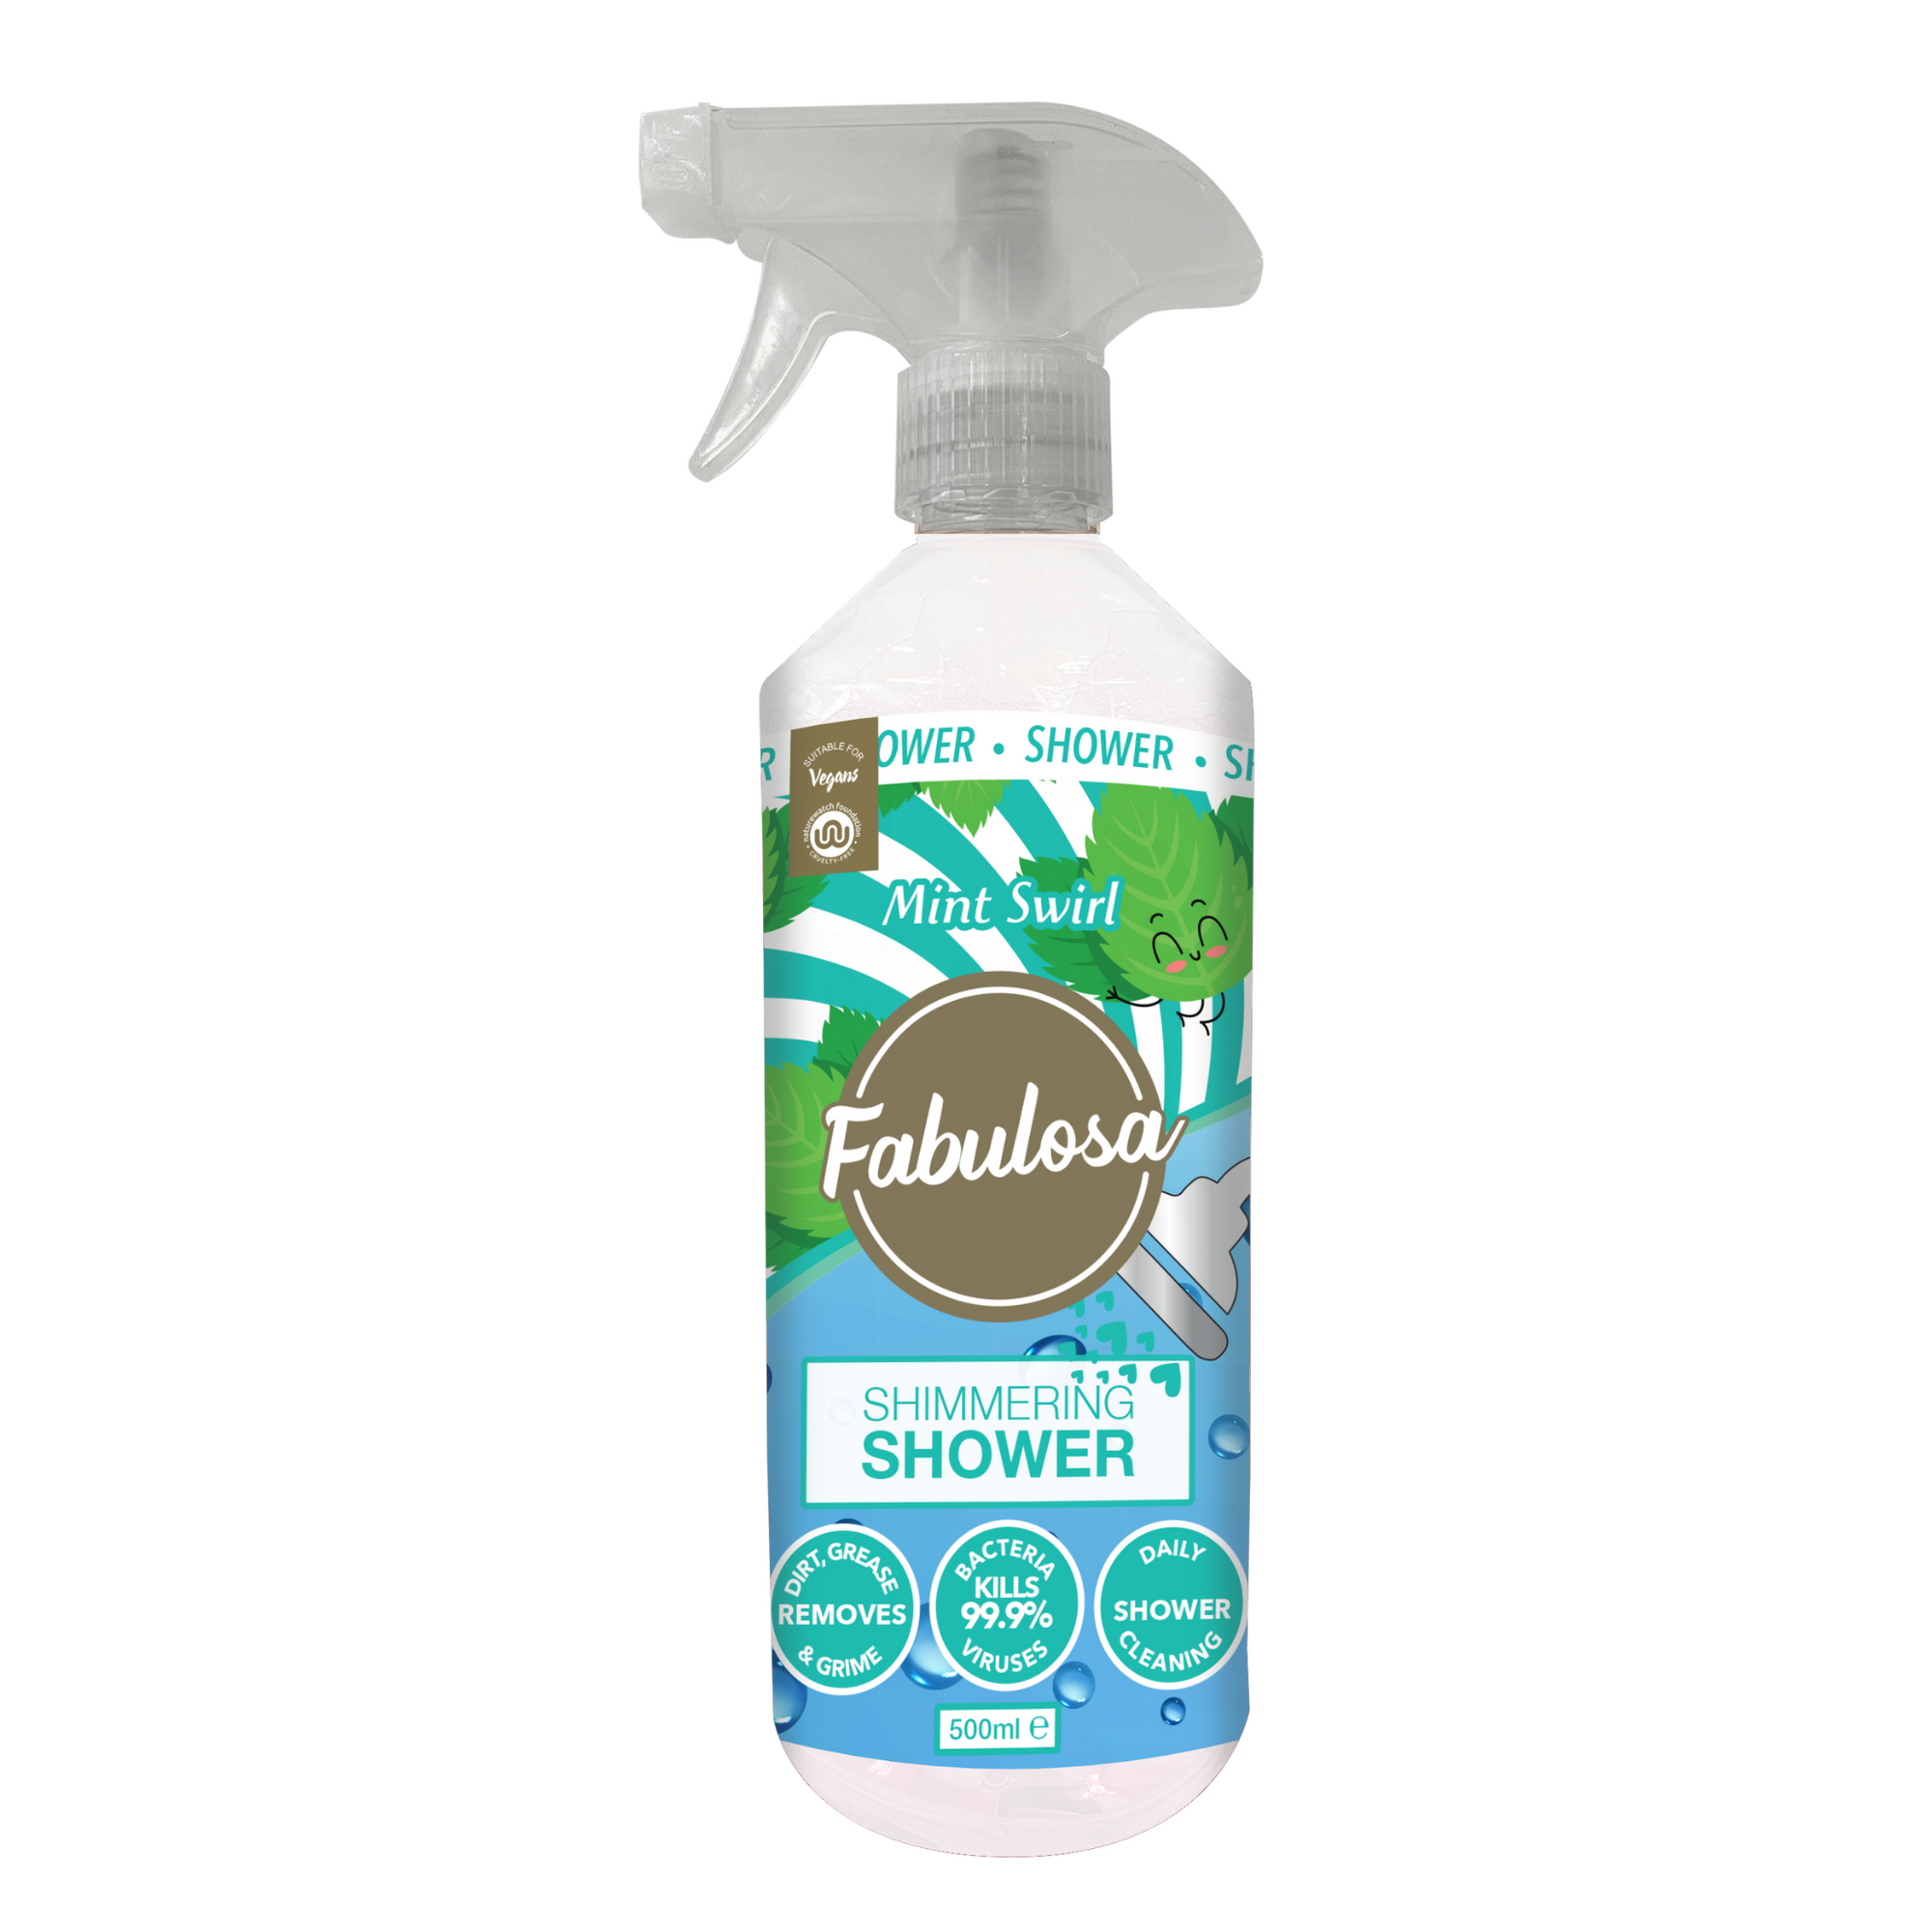 Fabulosa Shimmering Shower Spray - Mint Swirl (500ml)